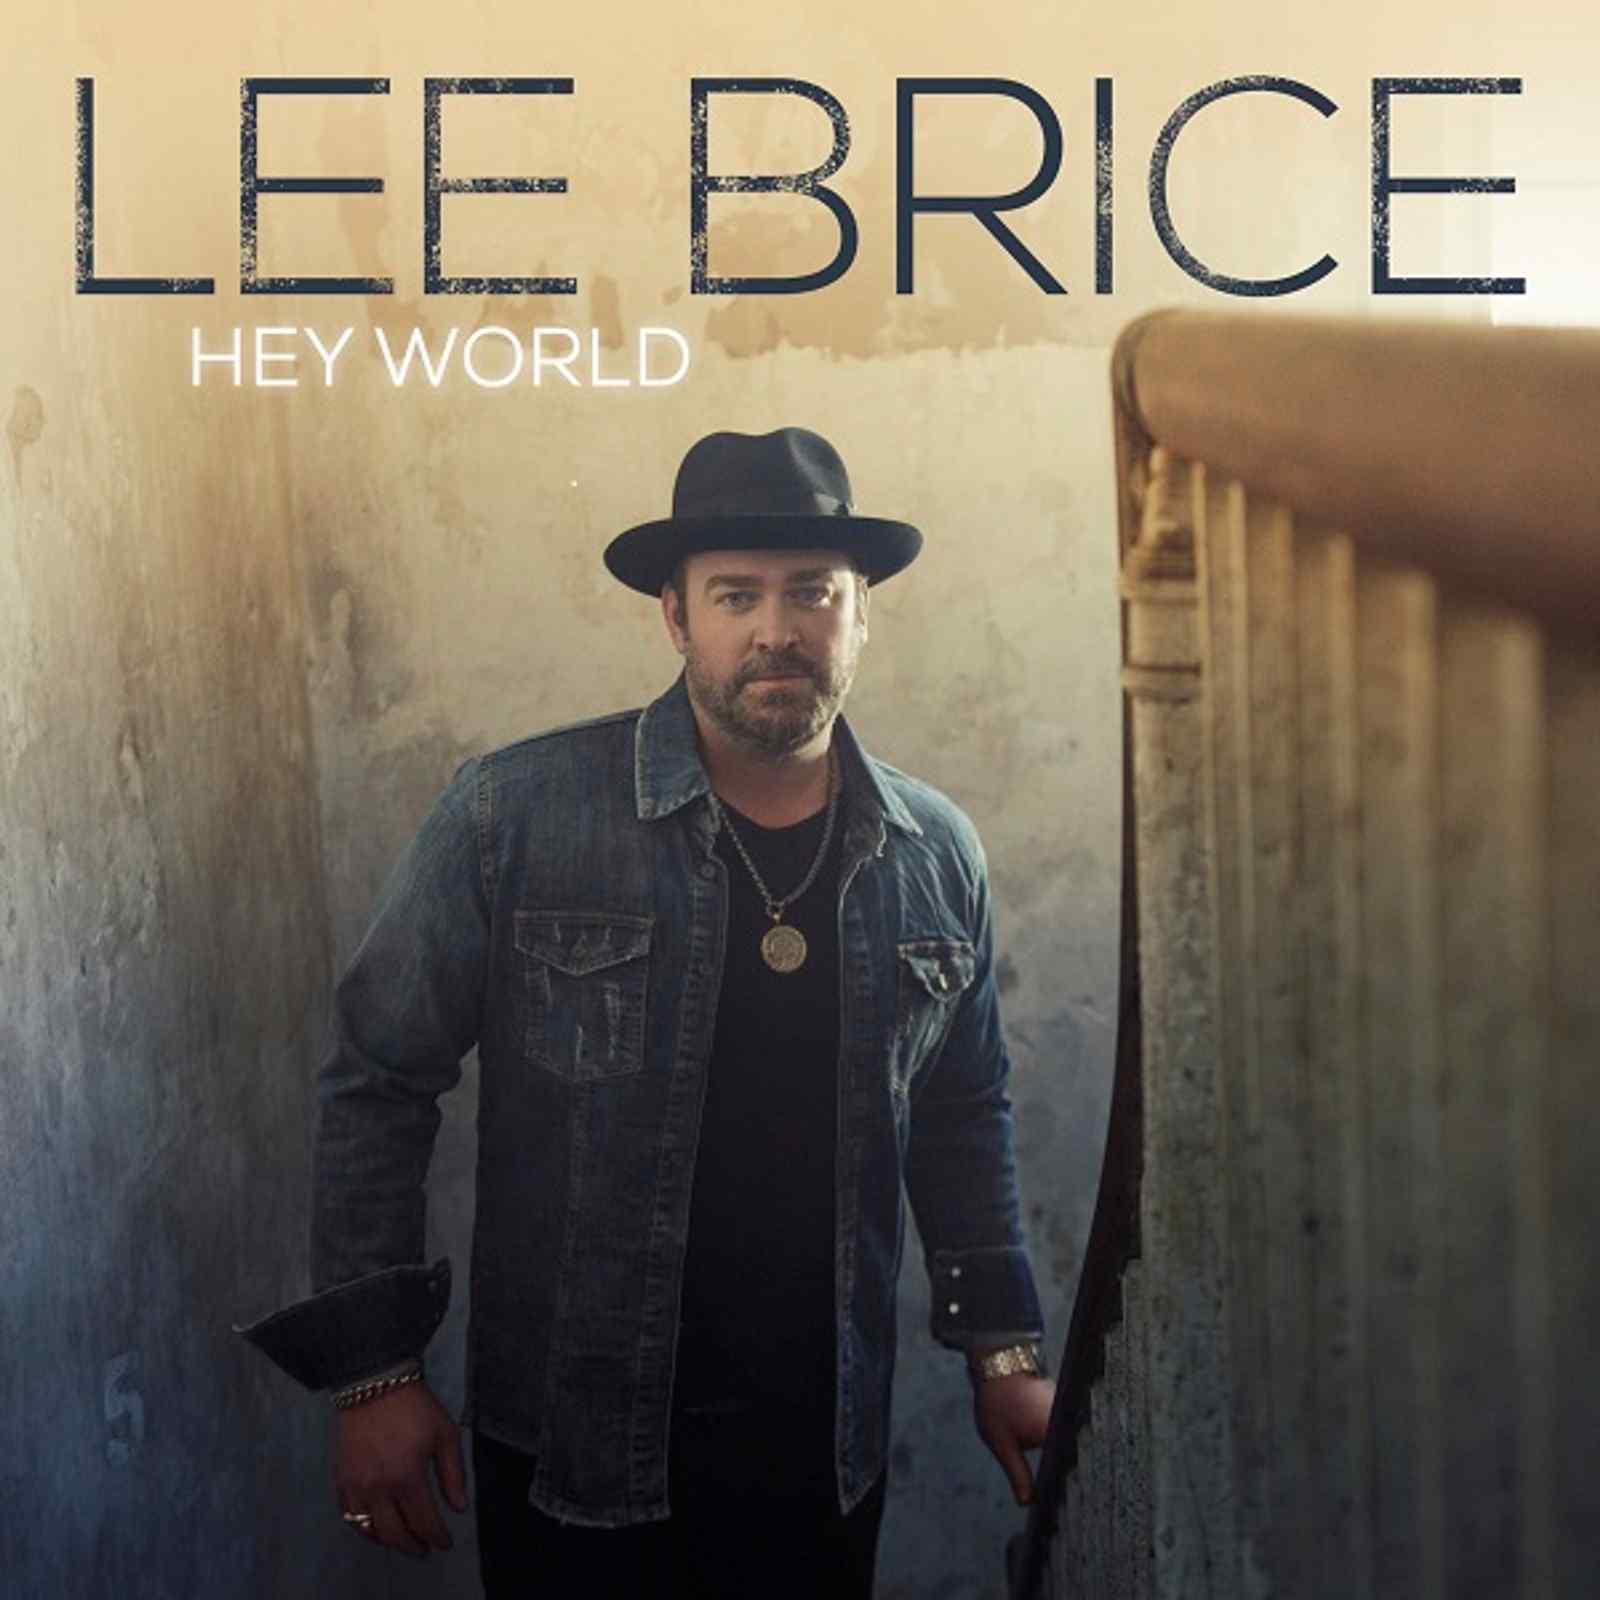 Hey World by Lee Brice